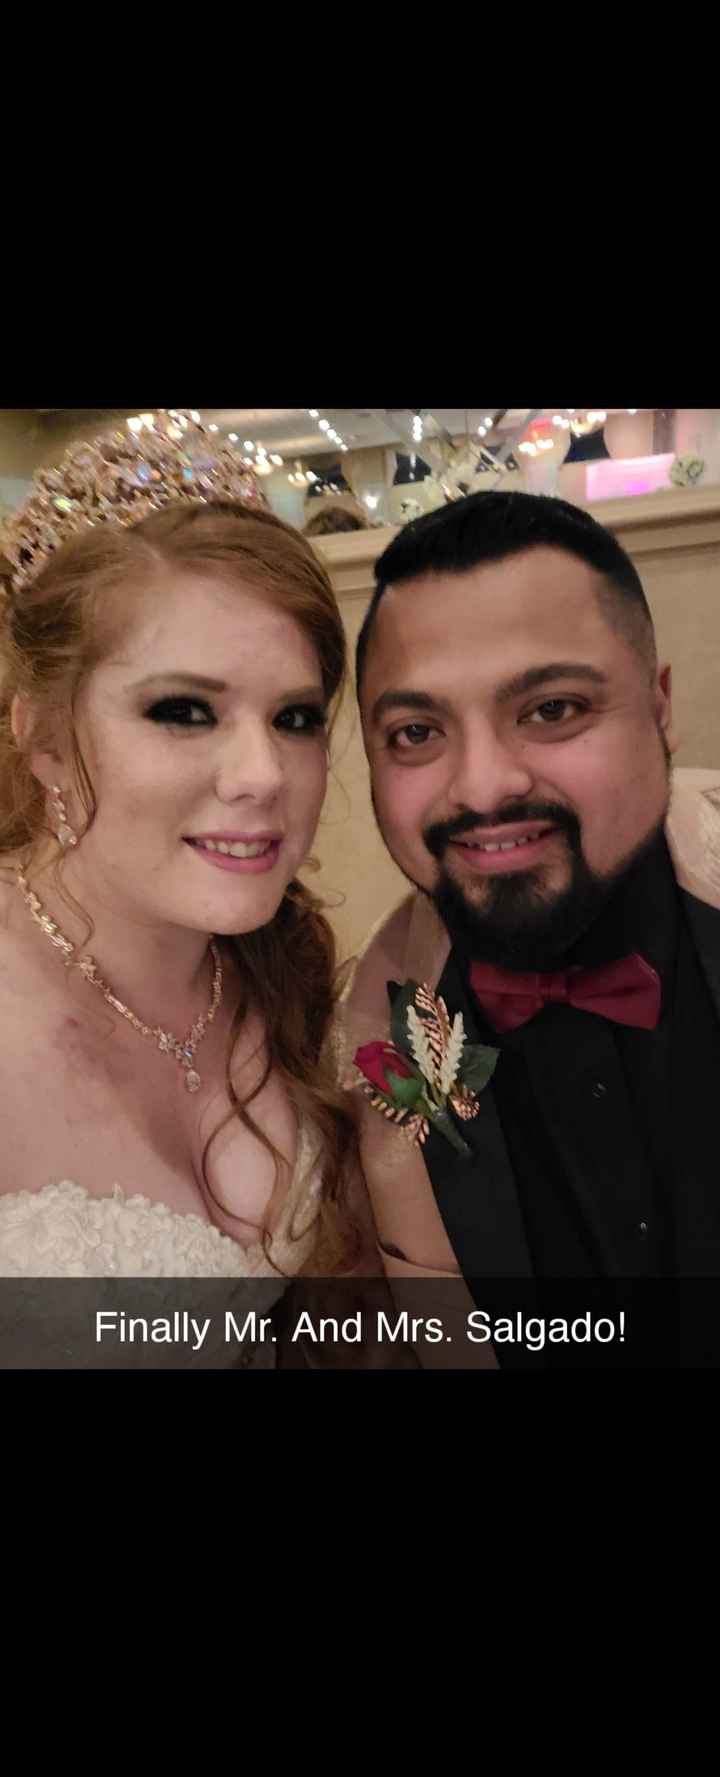 Finally Married! 10-23-2021 - 2